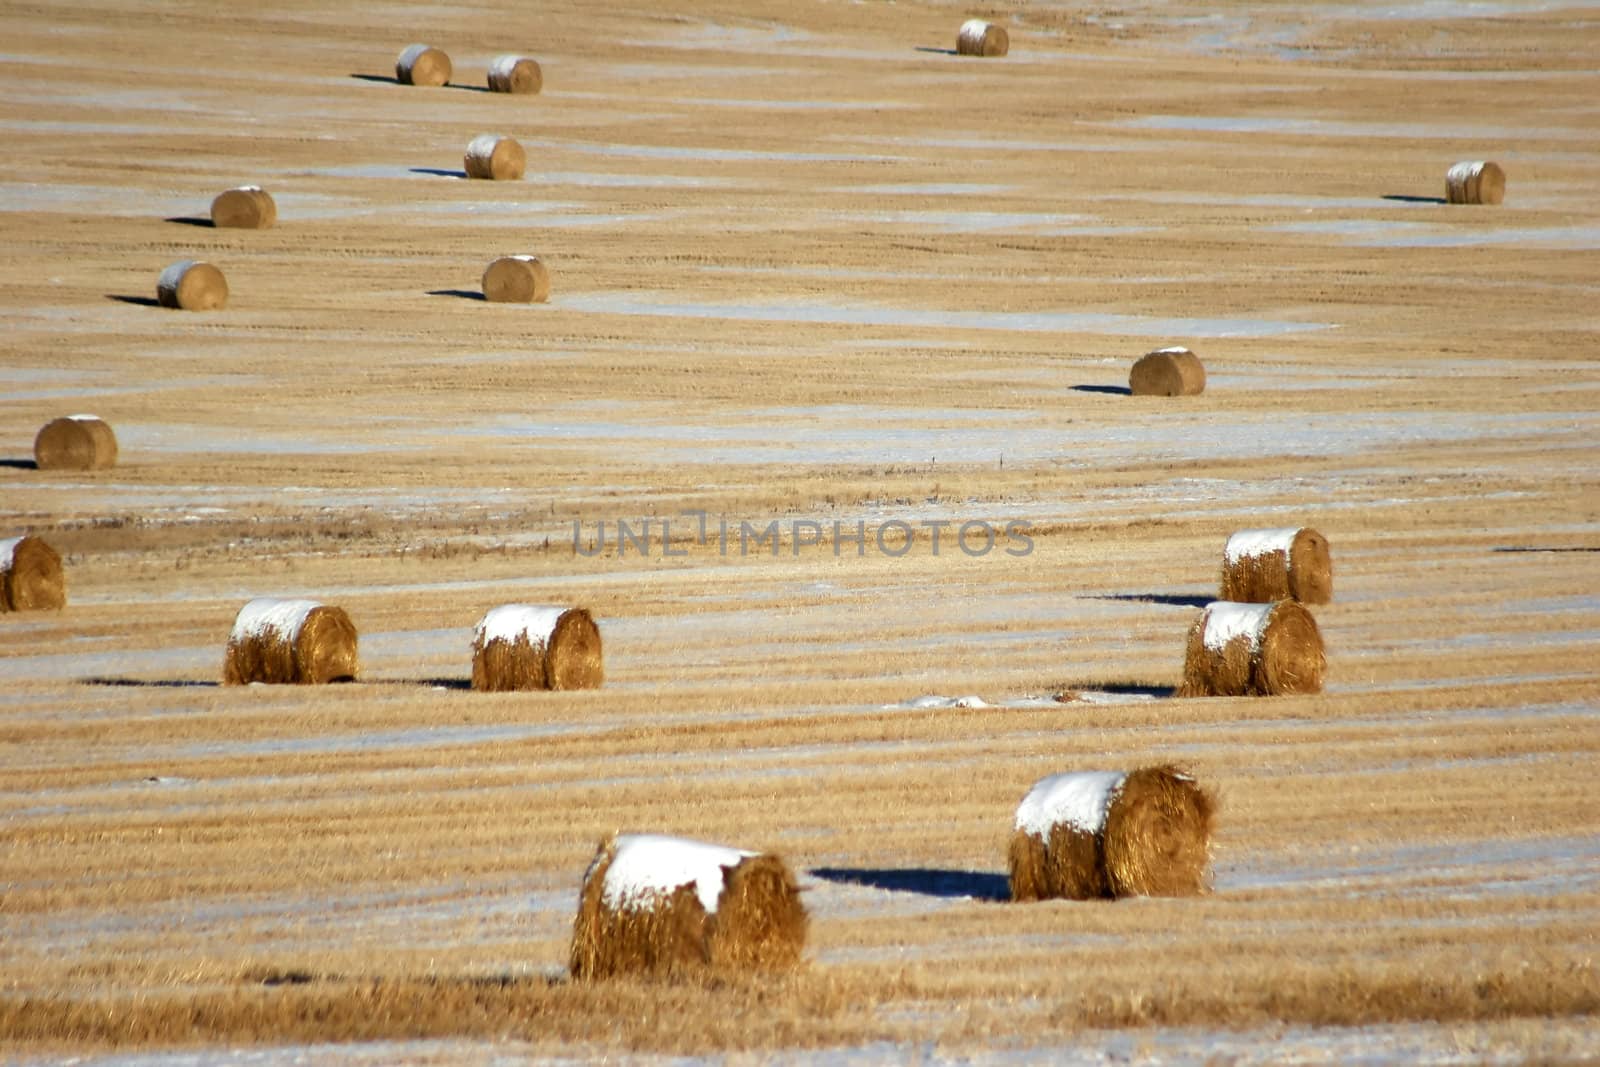 Hay rolls by Imagecom